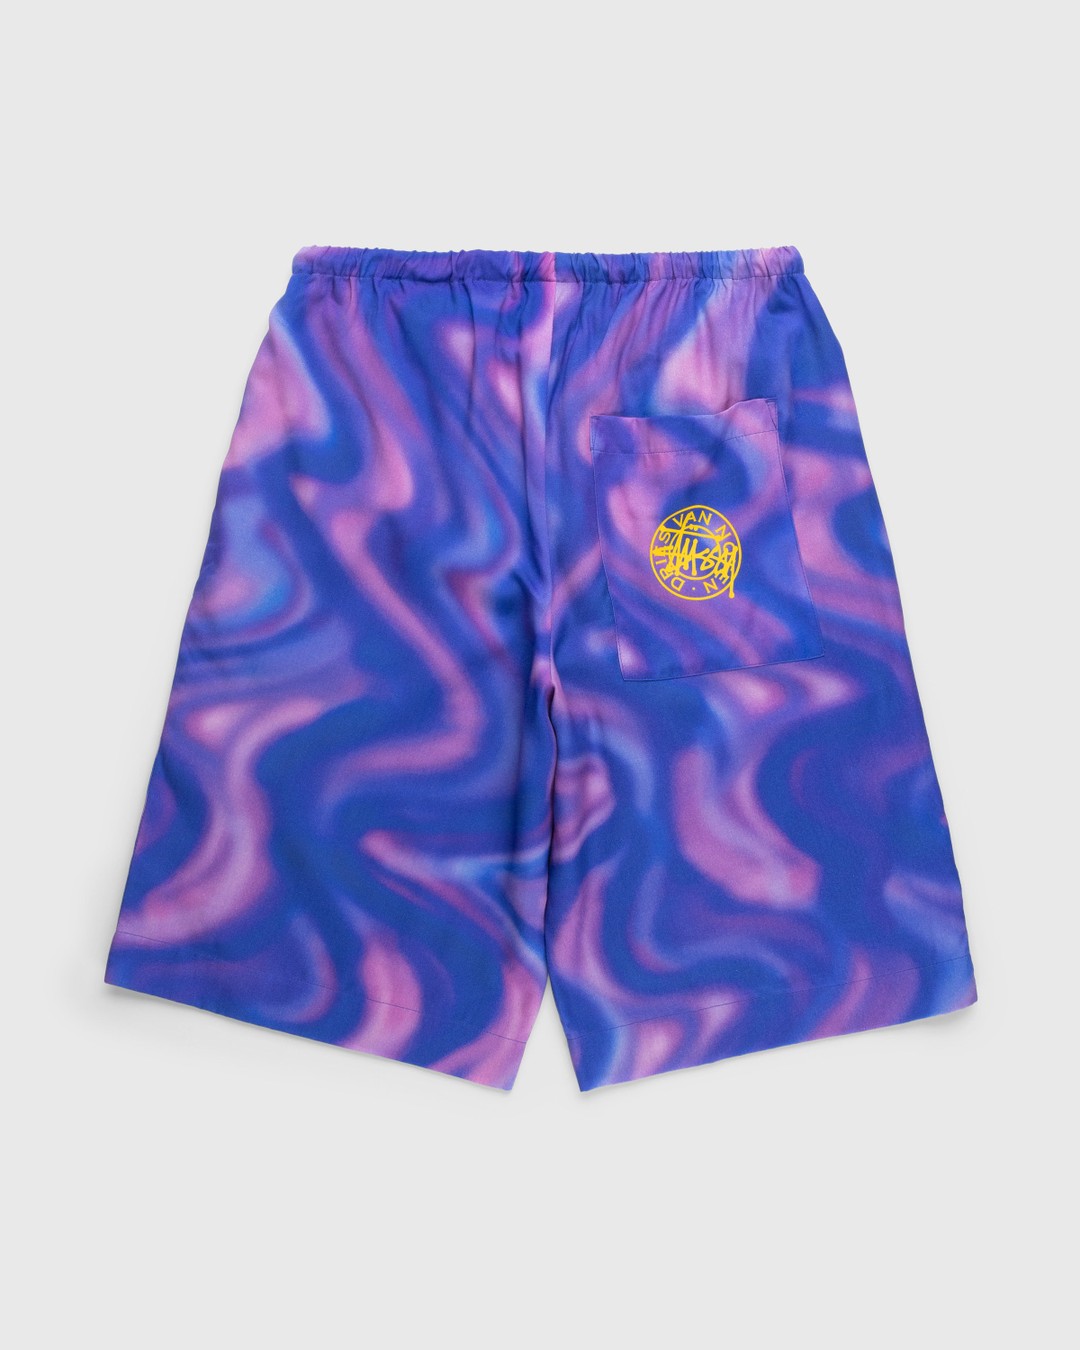 Stüssy x Dries van Noten – Airbrush Shrooms Shorts - Bermuda Cuts - Purple - Image 2